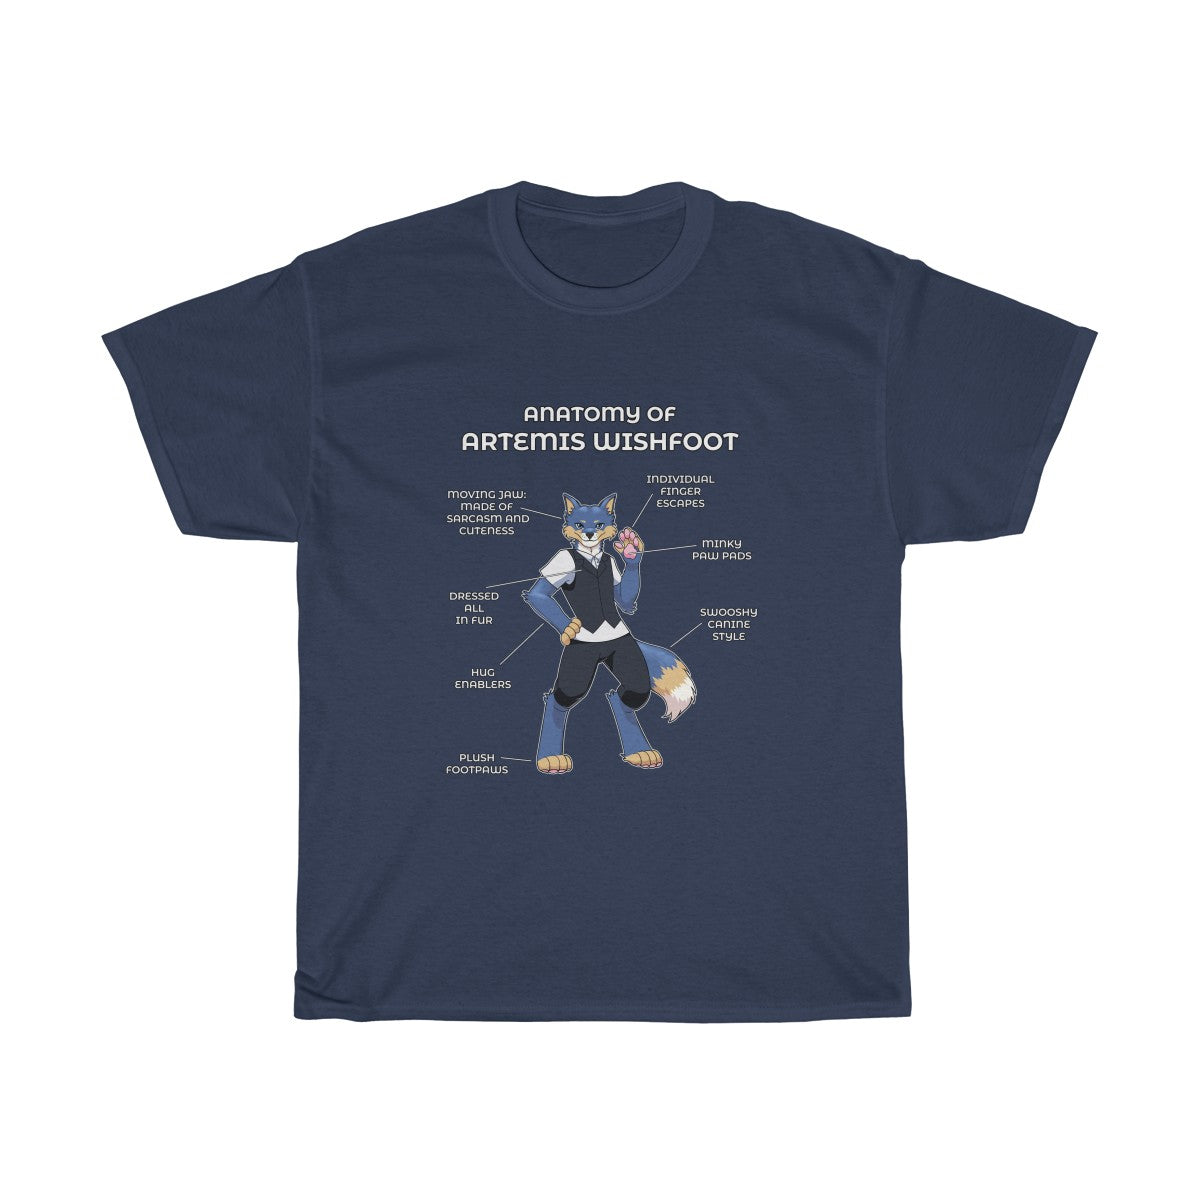 Anatomy of Artemis - T-Shirt T-Shirt Artemis Wishfoot Navy Blue S 